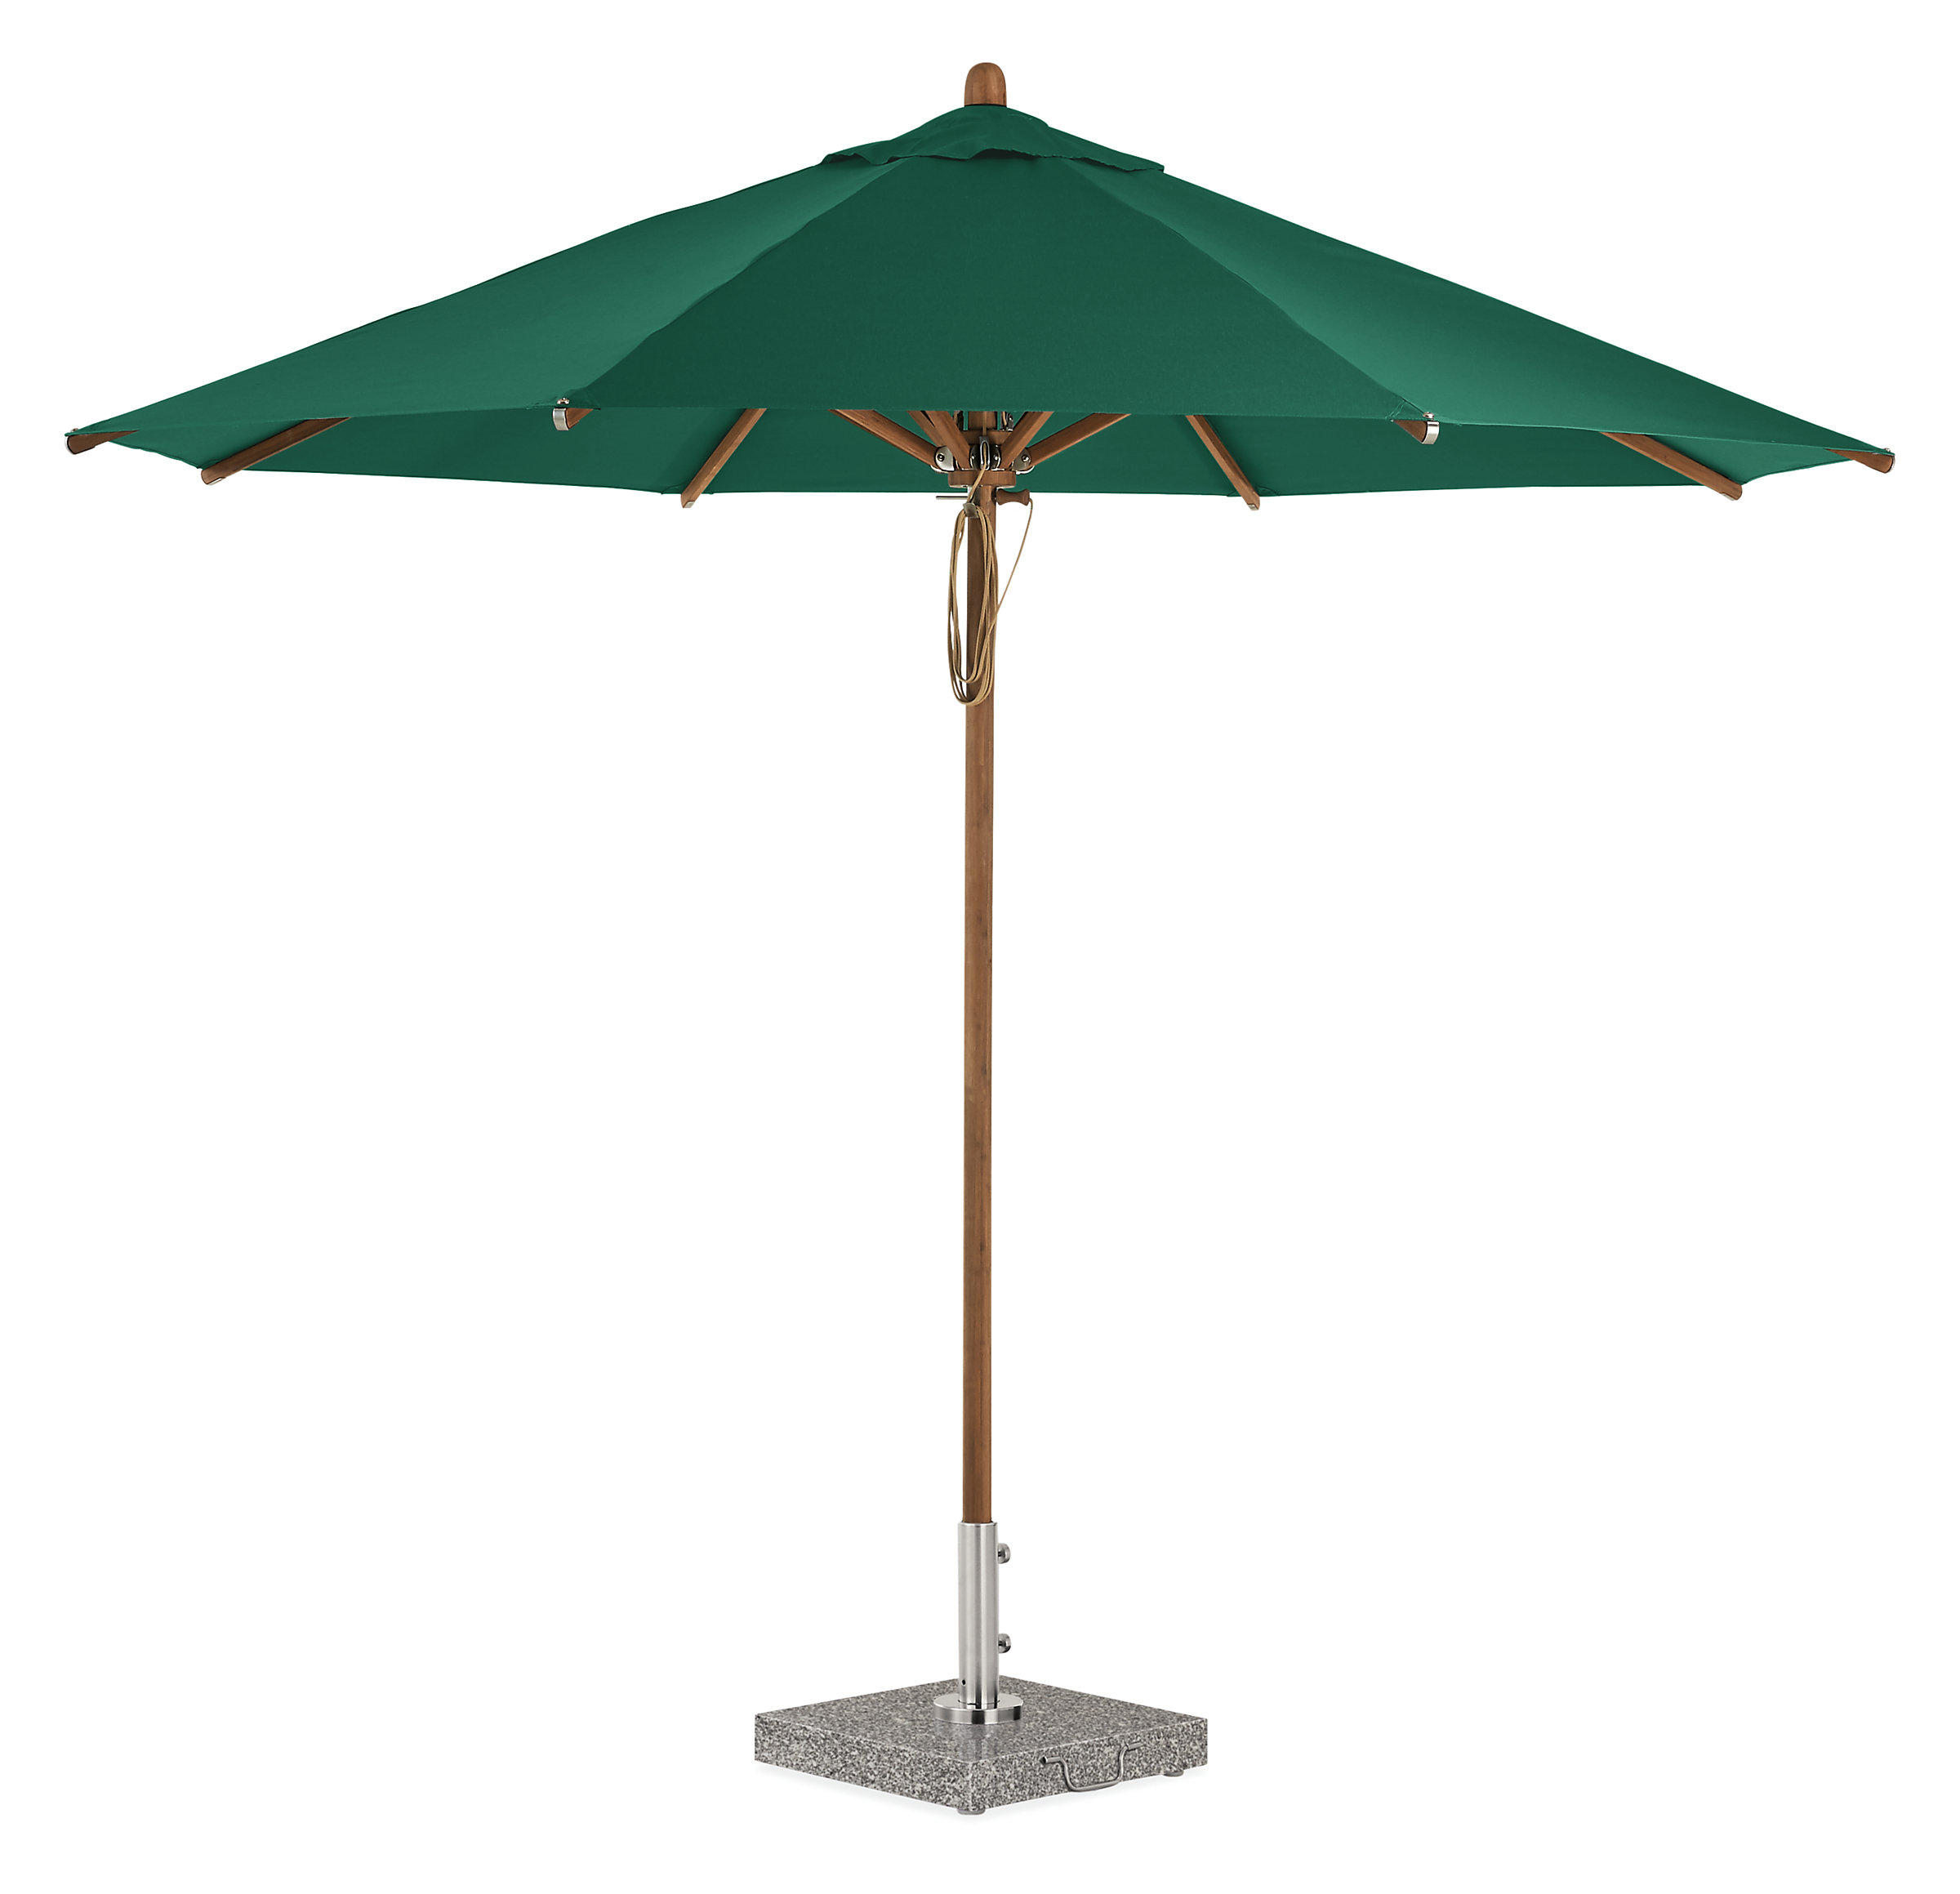 Cirro 10' Patio Umbrella in Green with Bamboo Pole